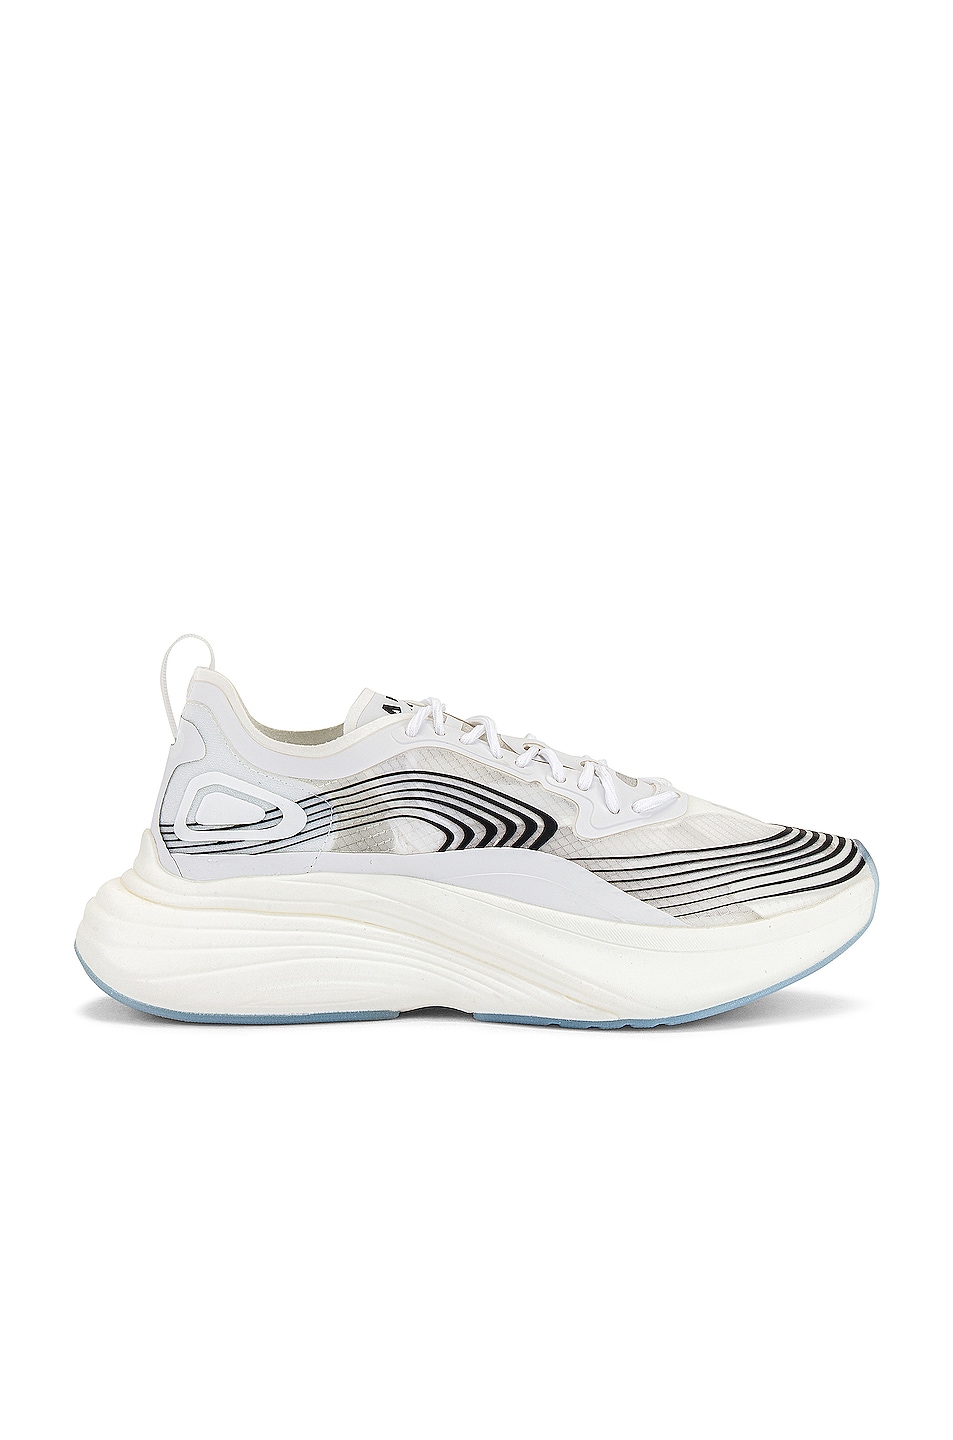 Image 1 of APL: Athletic Propulsion Labs Streamline Sneaker in White, White, & Black